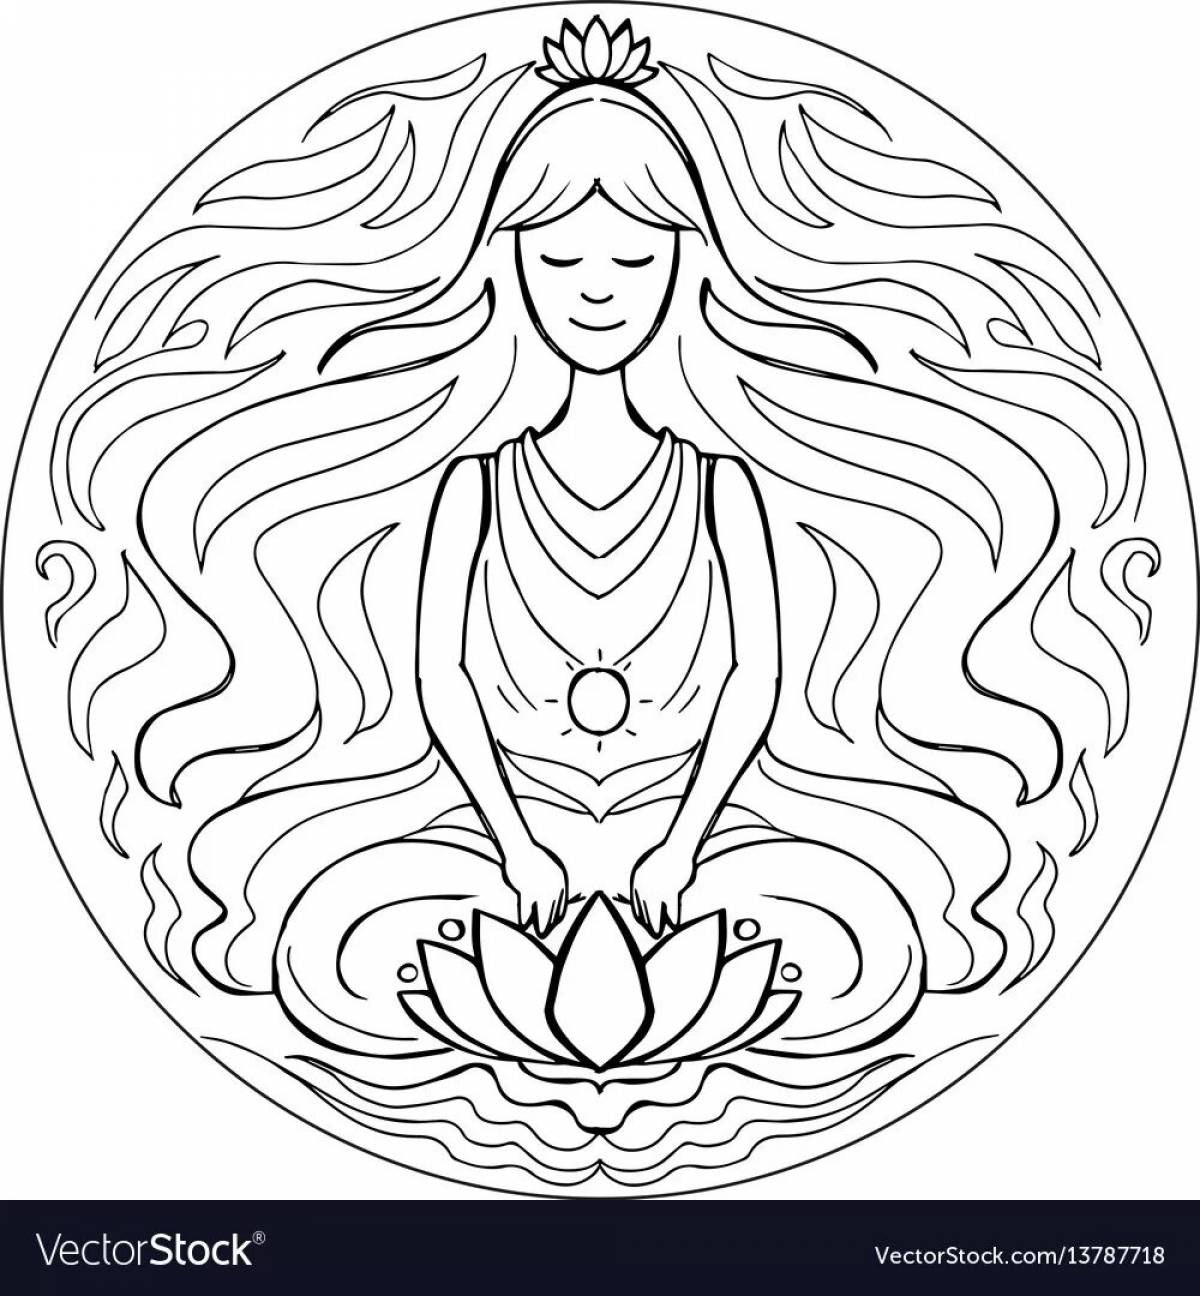 Hypnotic meditation coloring book